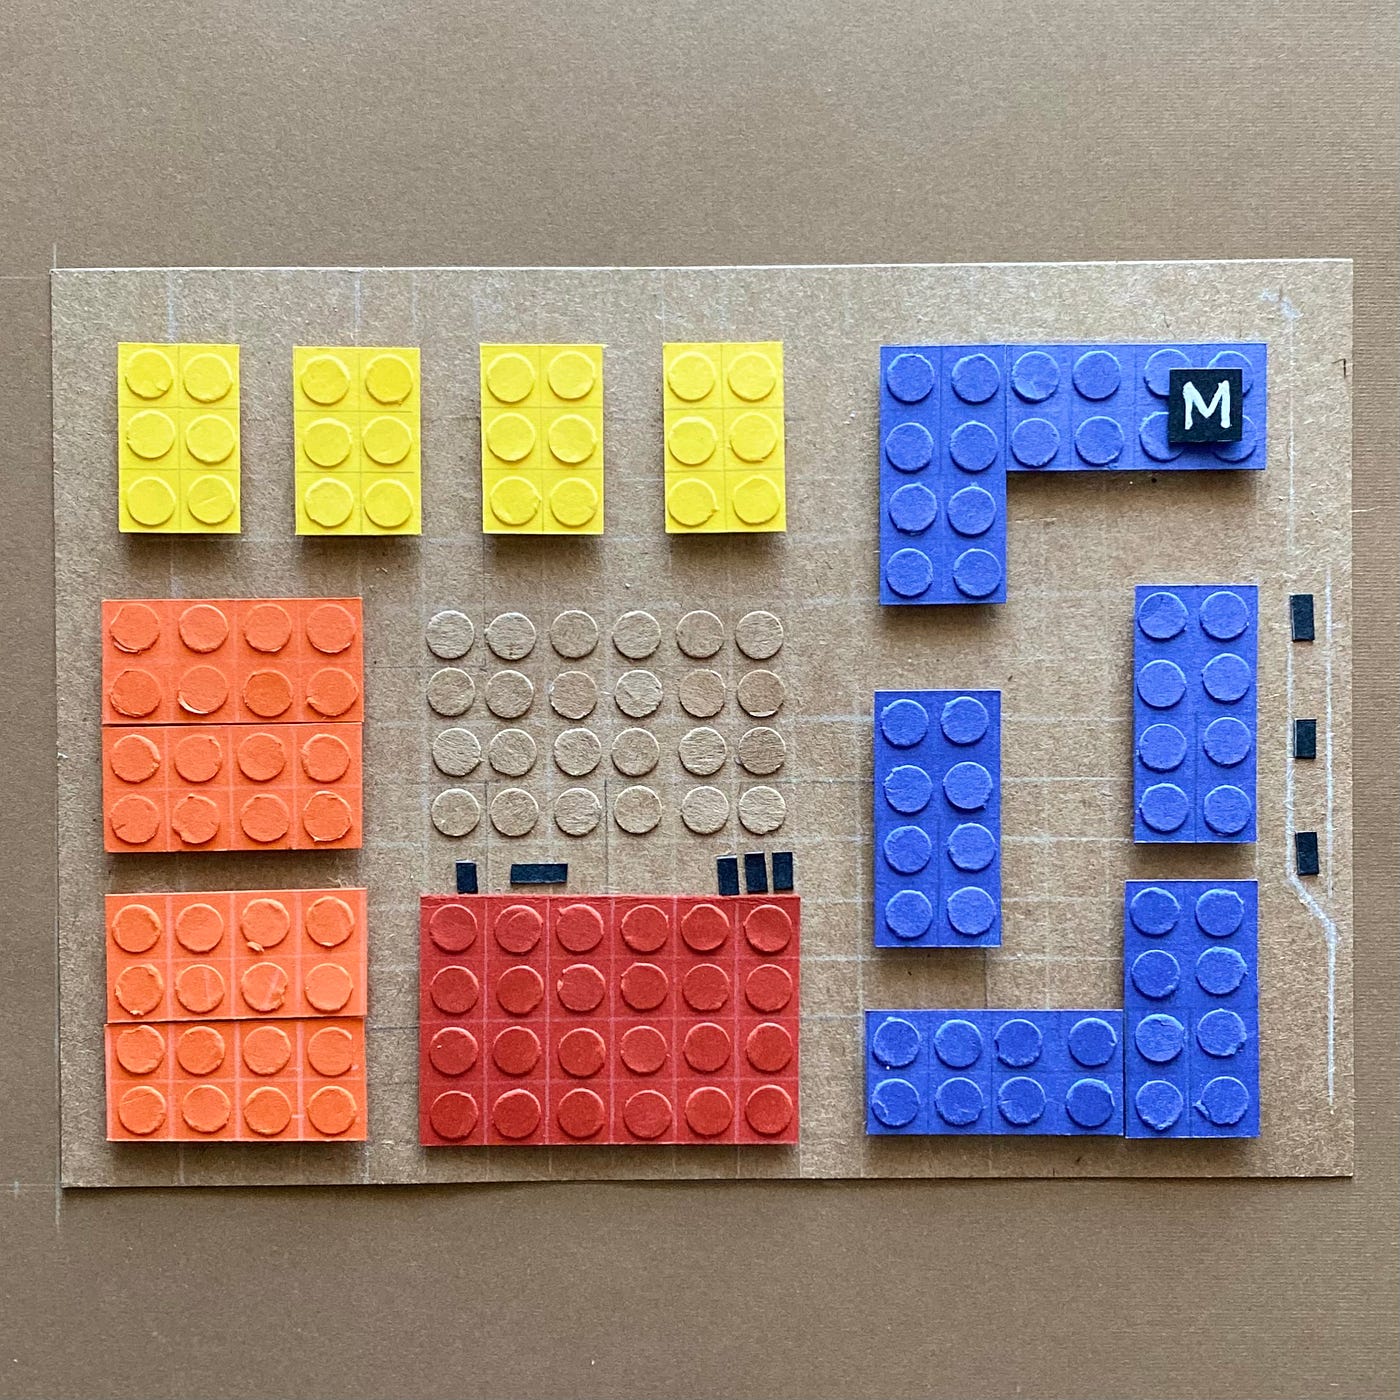 LEGO Matters. Today, the 28th of January, | by Hazel Hepburn | Jan, | Medium